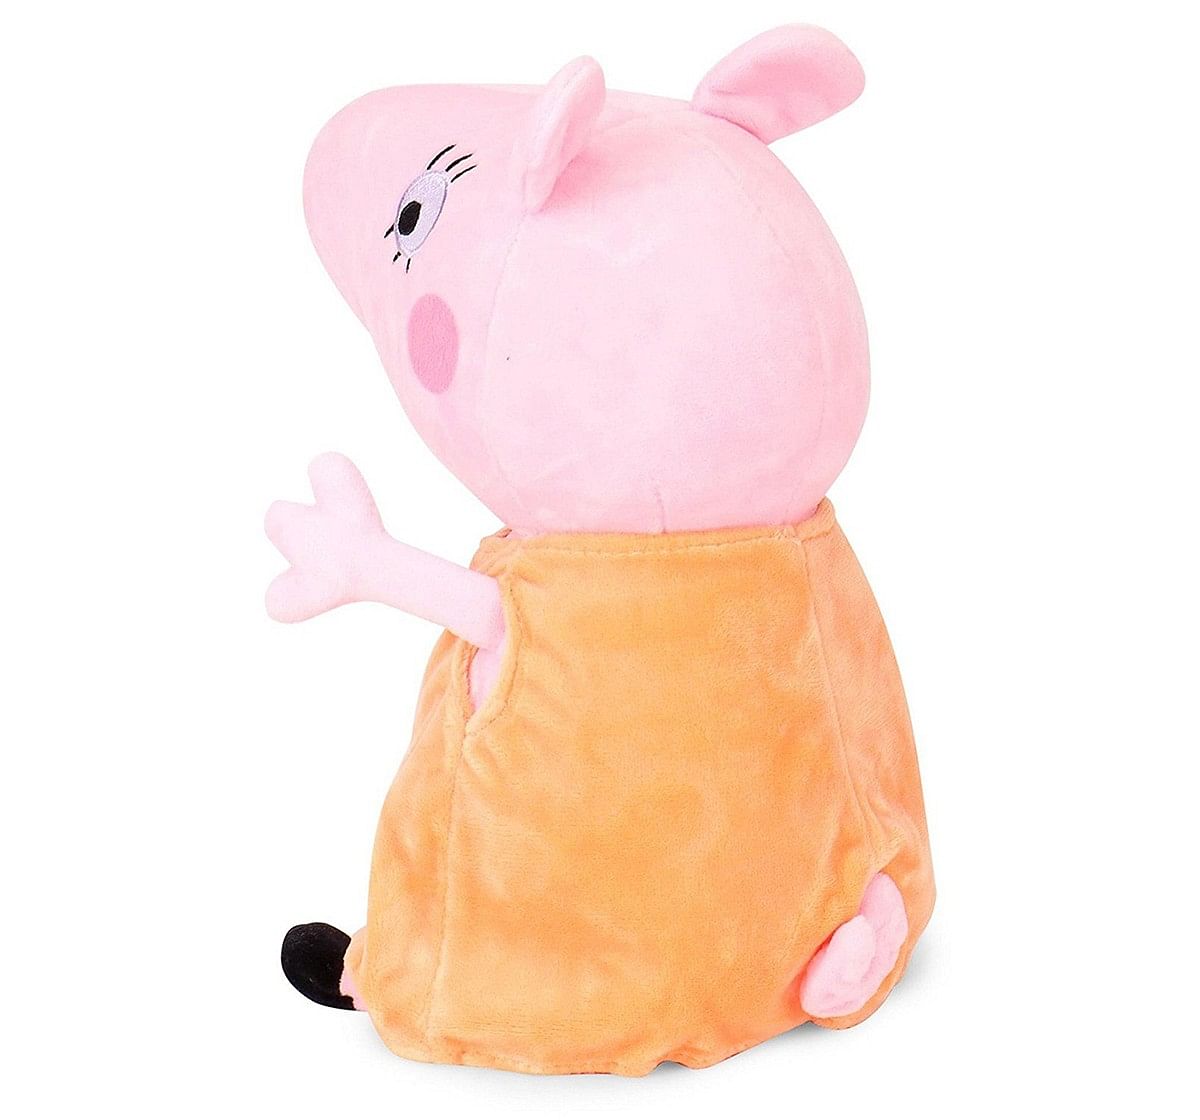 Mummy Pig Plush - 30 cm Soft Toy | Peppa Pig